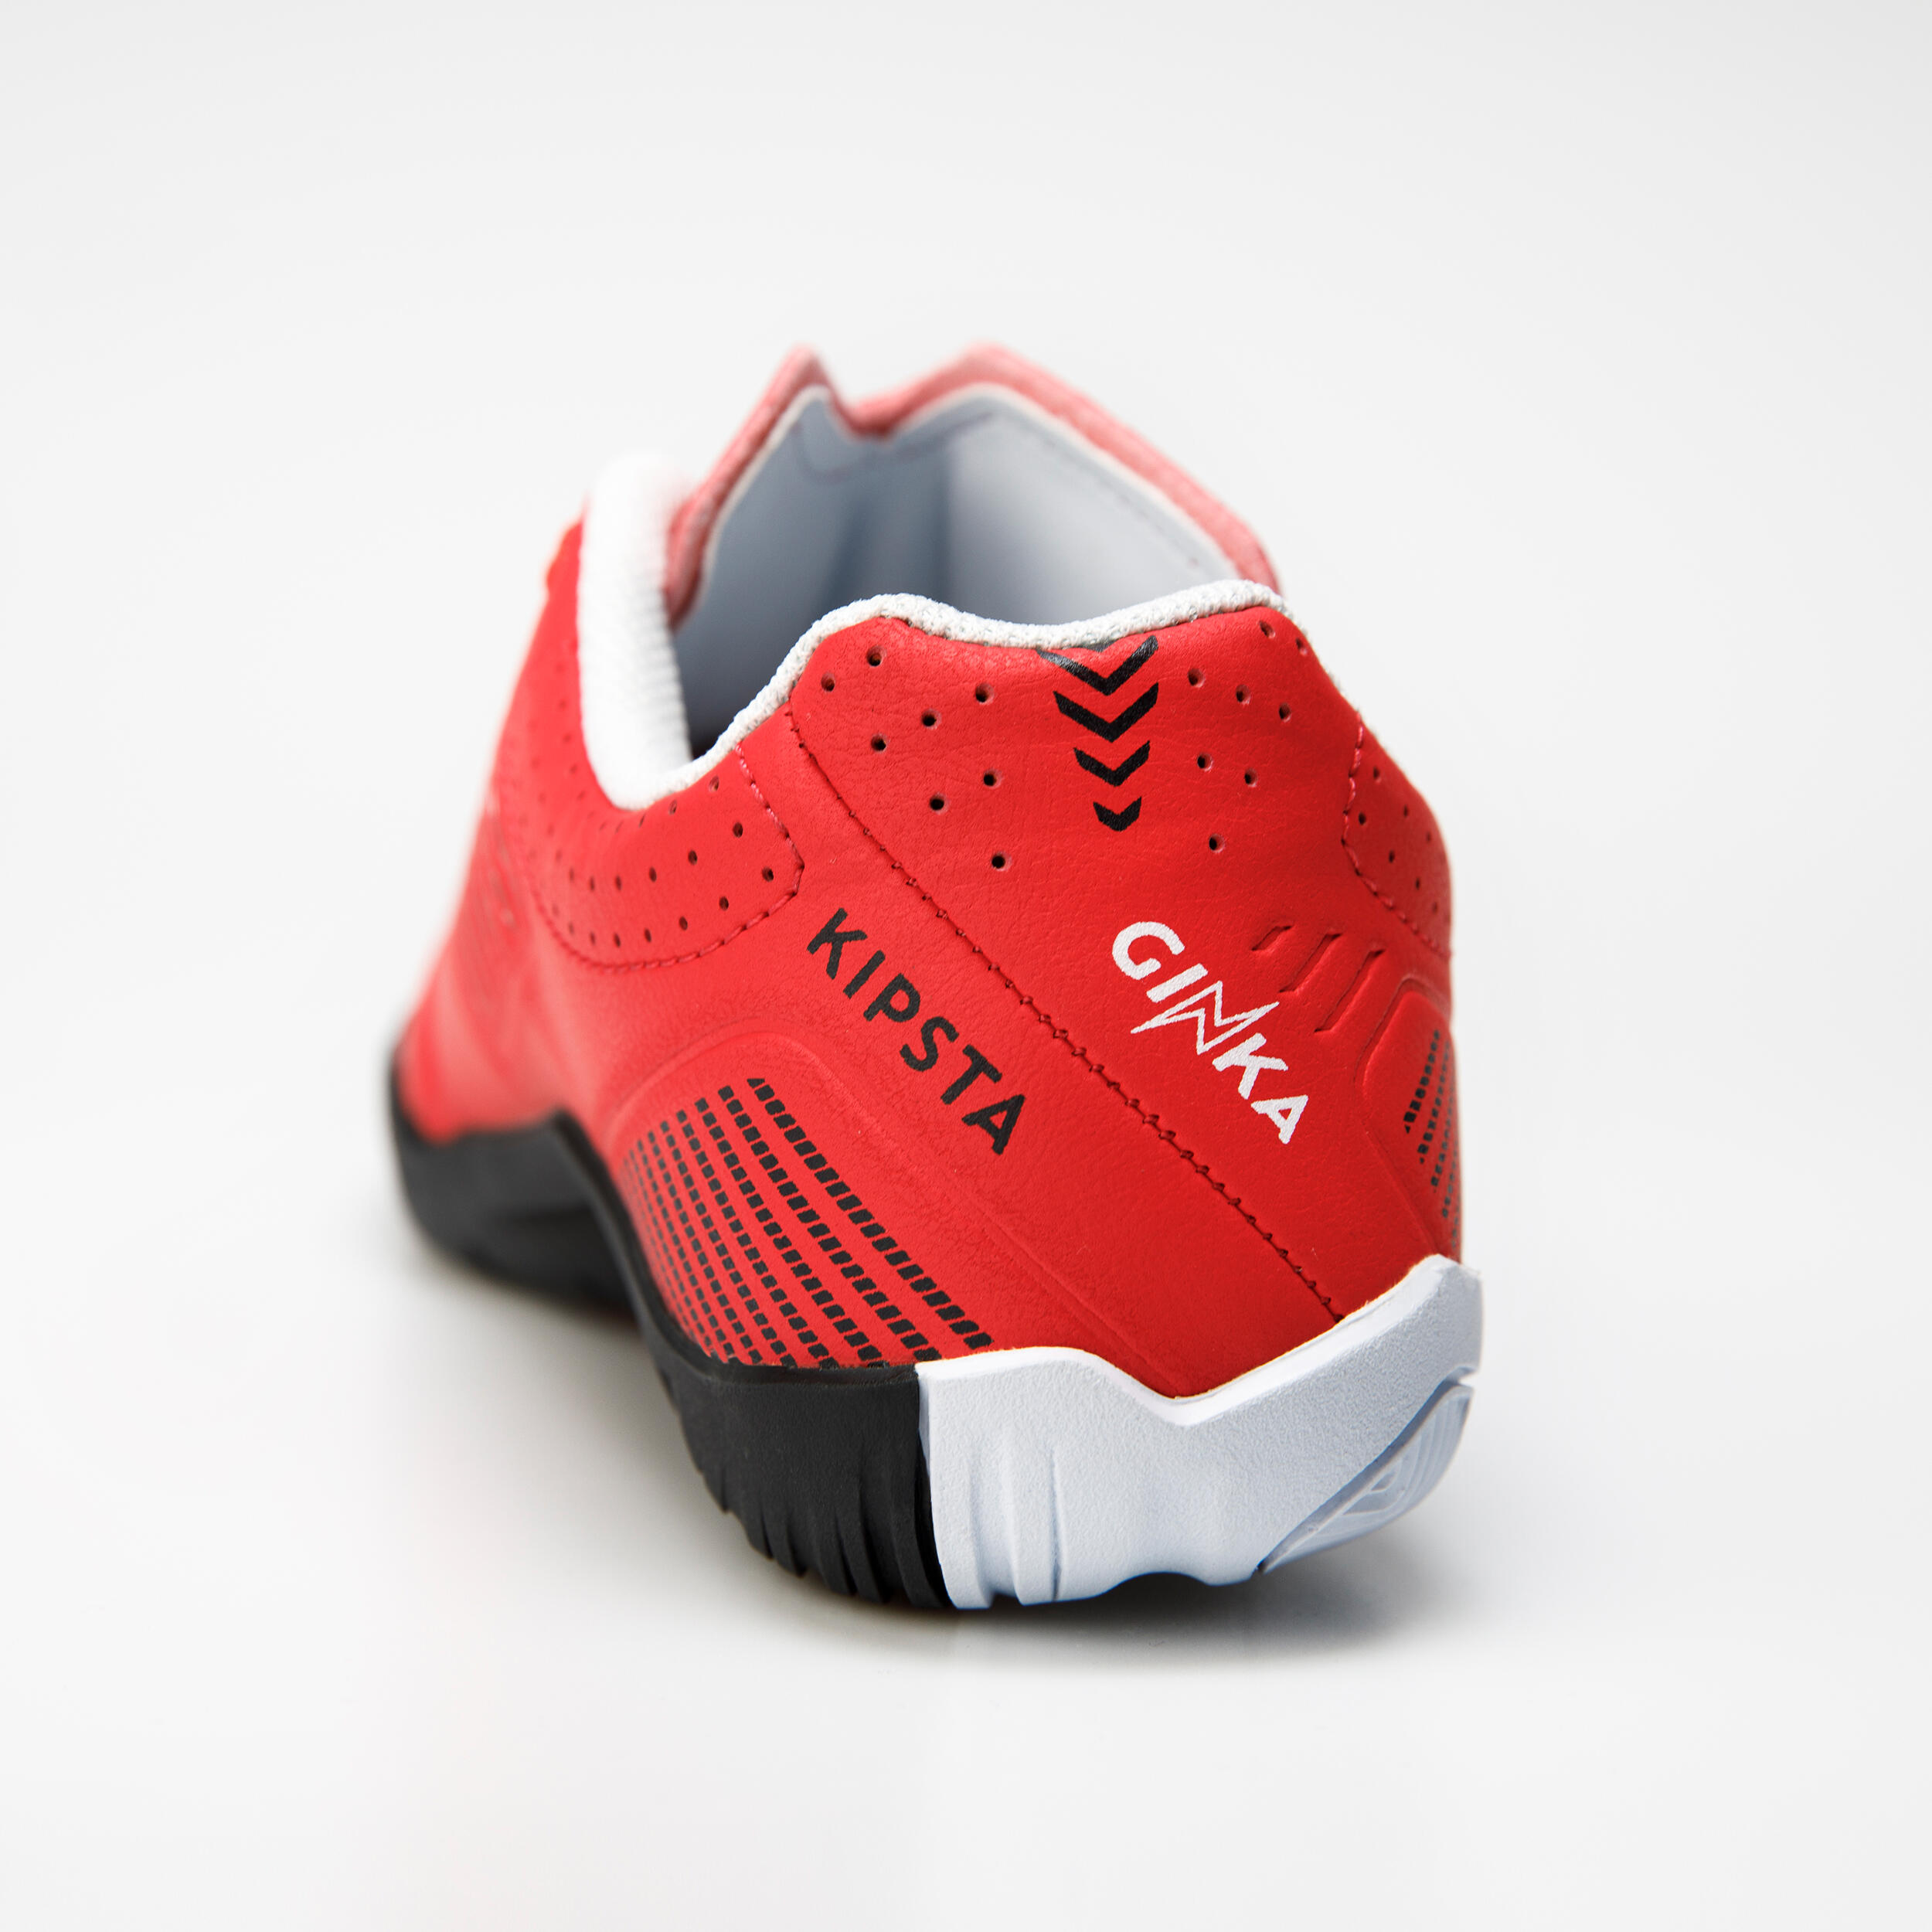 Chaussures de futsal enfant - Ginka 500 rouge/noir - KIPSTA